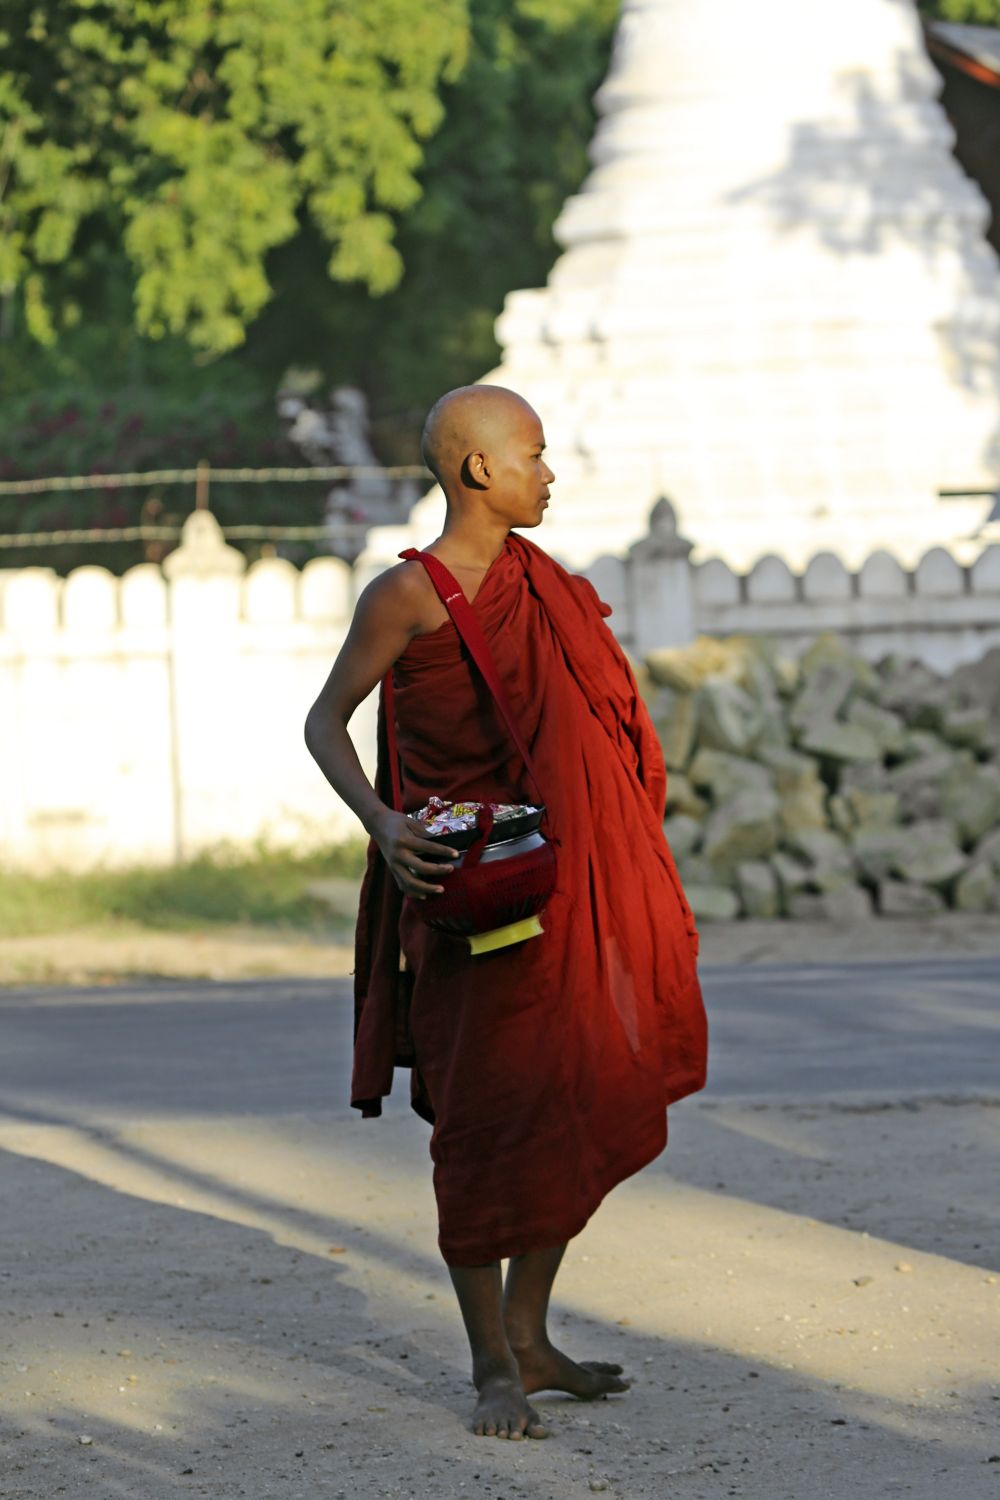 Junger Mönch nach dem Almosengang